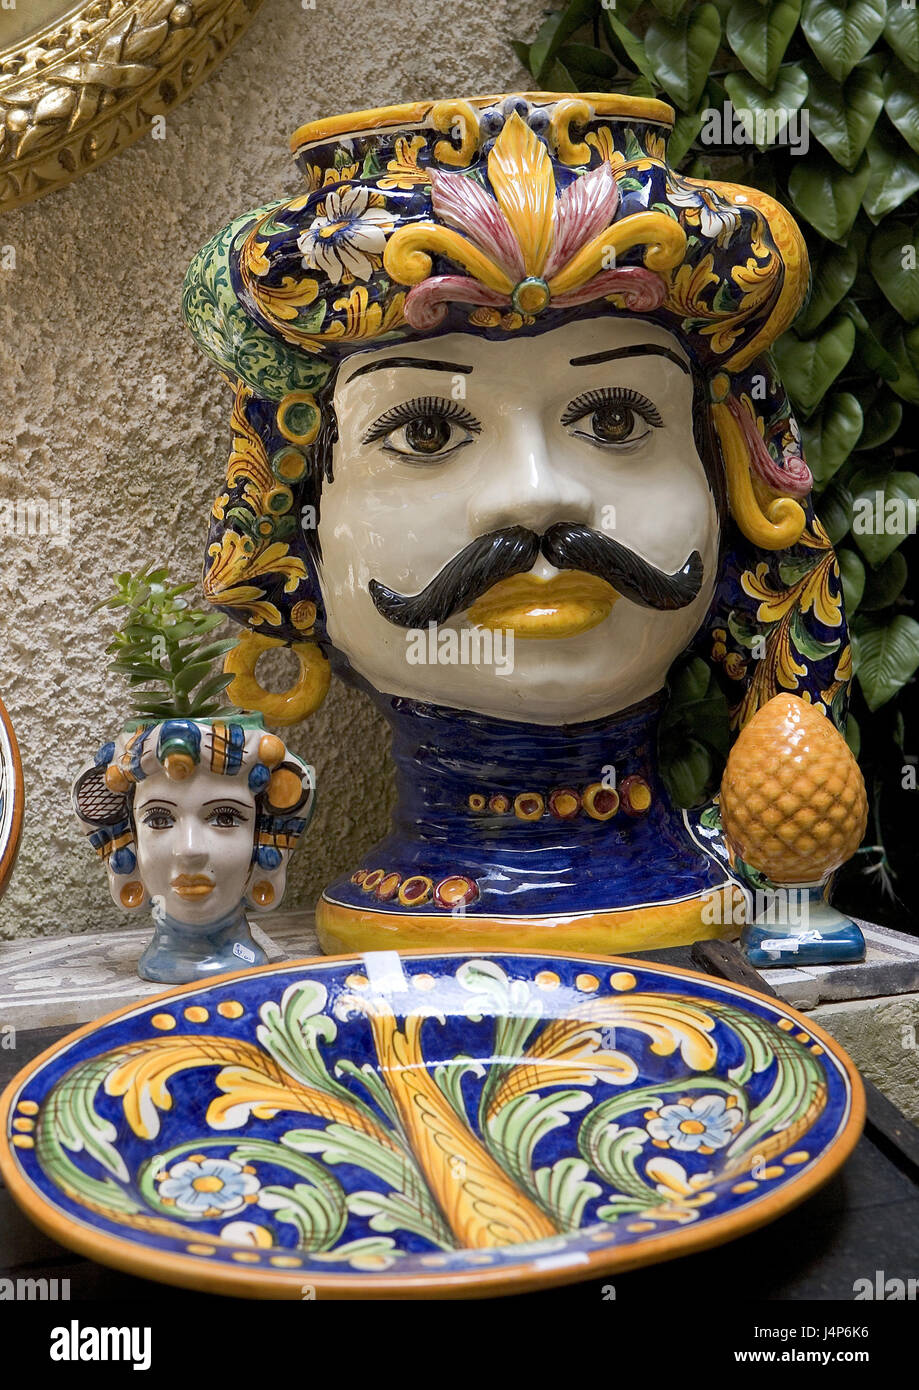 Italy, island Sicily, ceramics, flower vase, look Stock Photo - Alamy